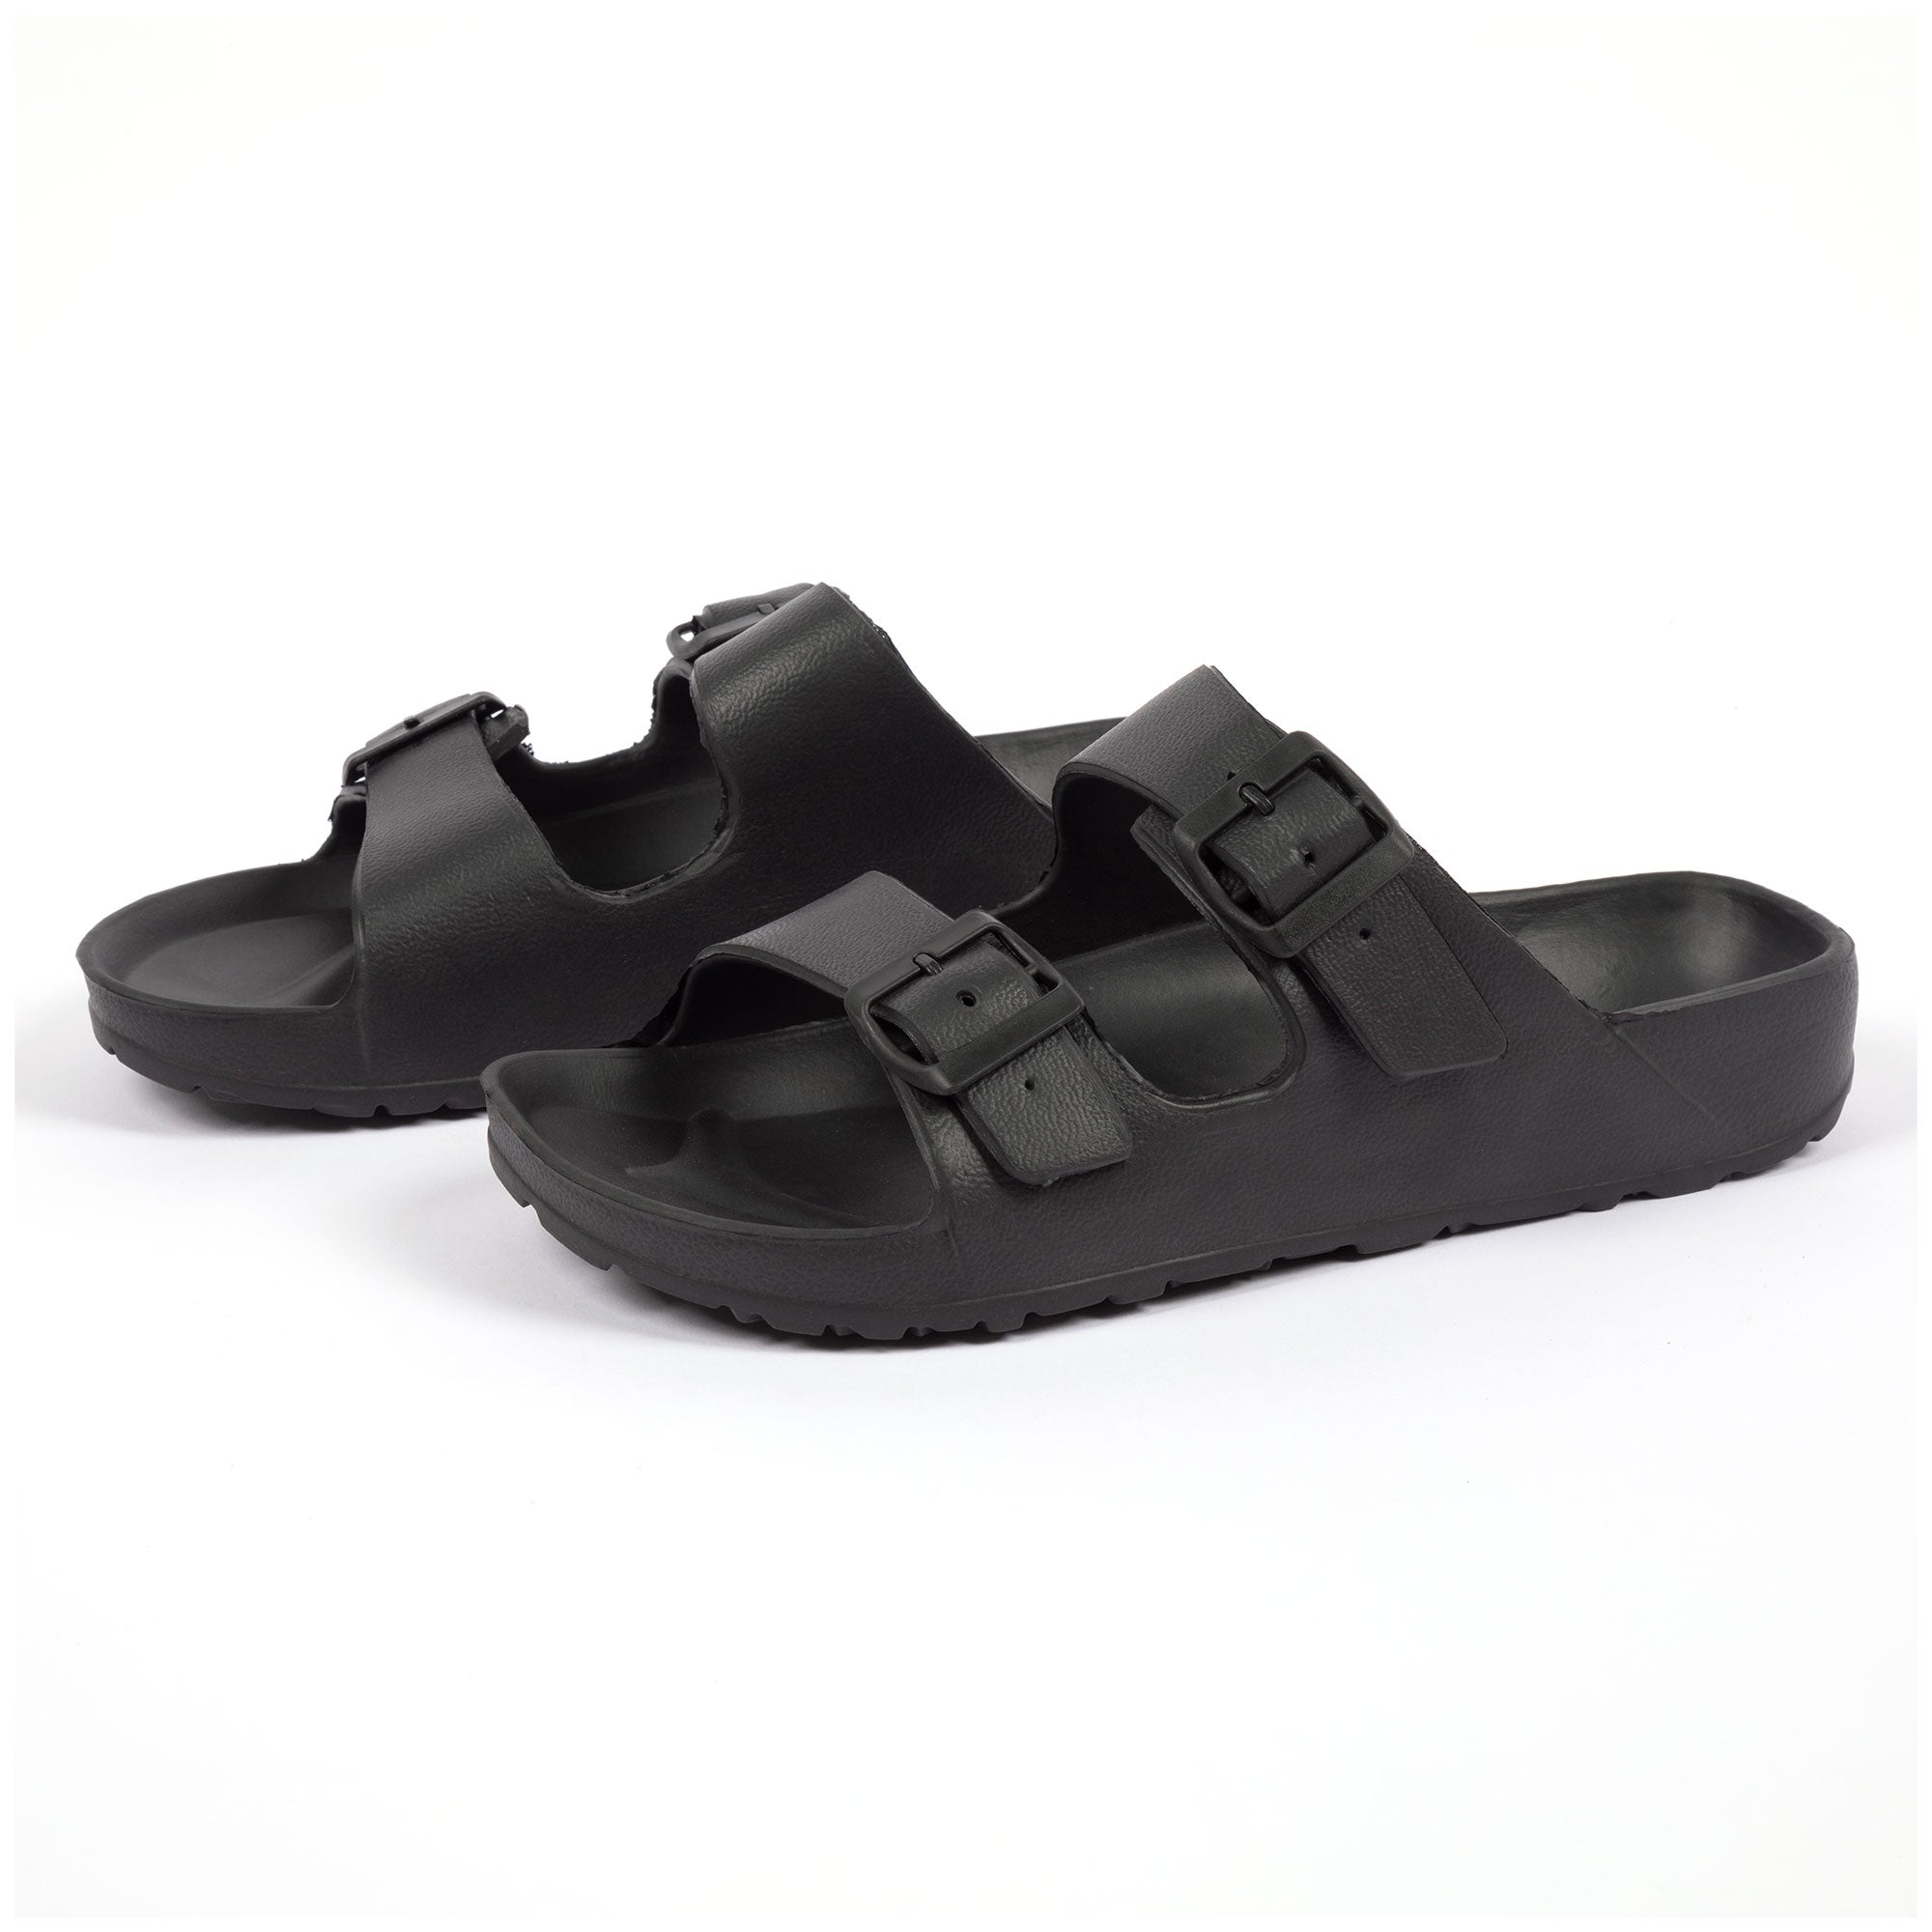 Men's Double Buckle Slide Sandals - Black - 12